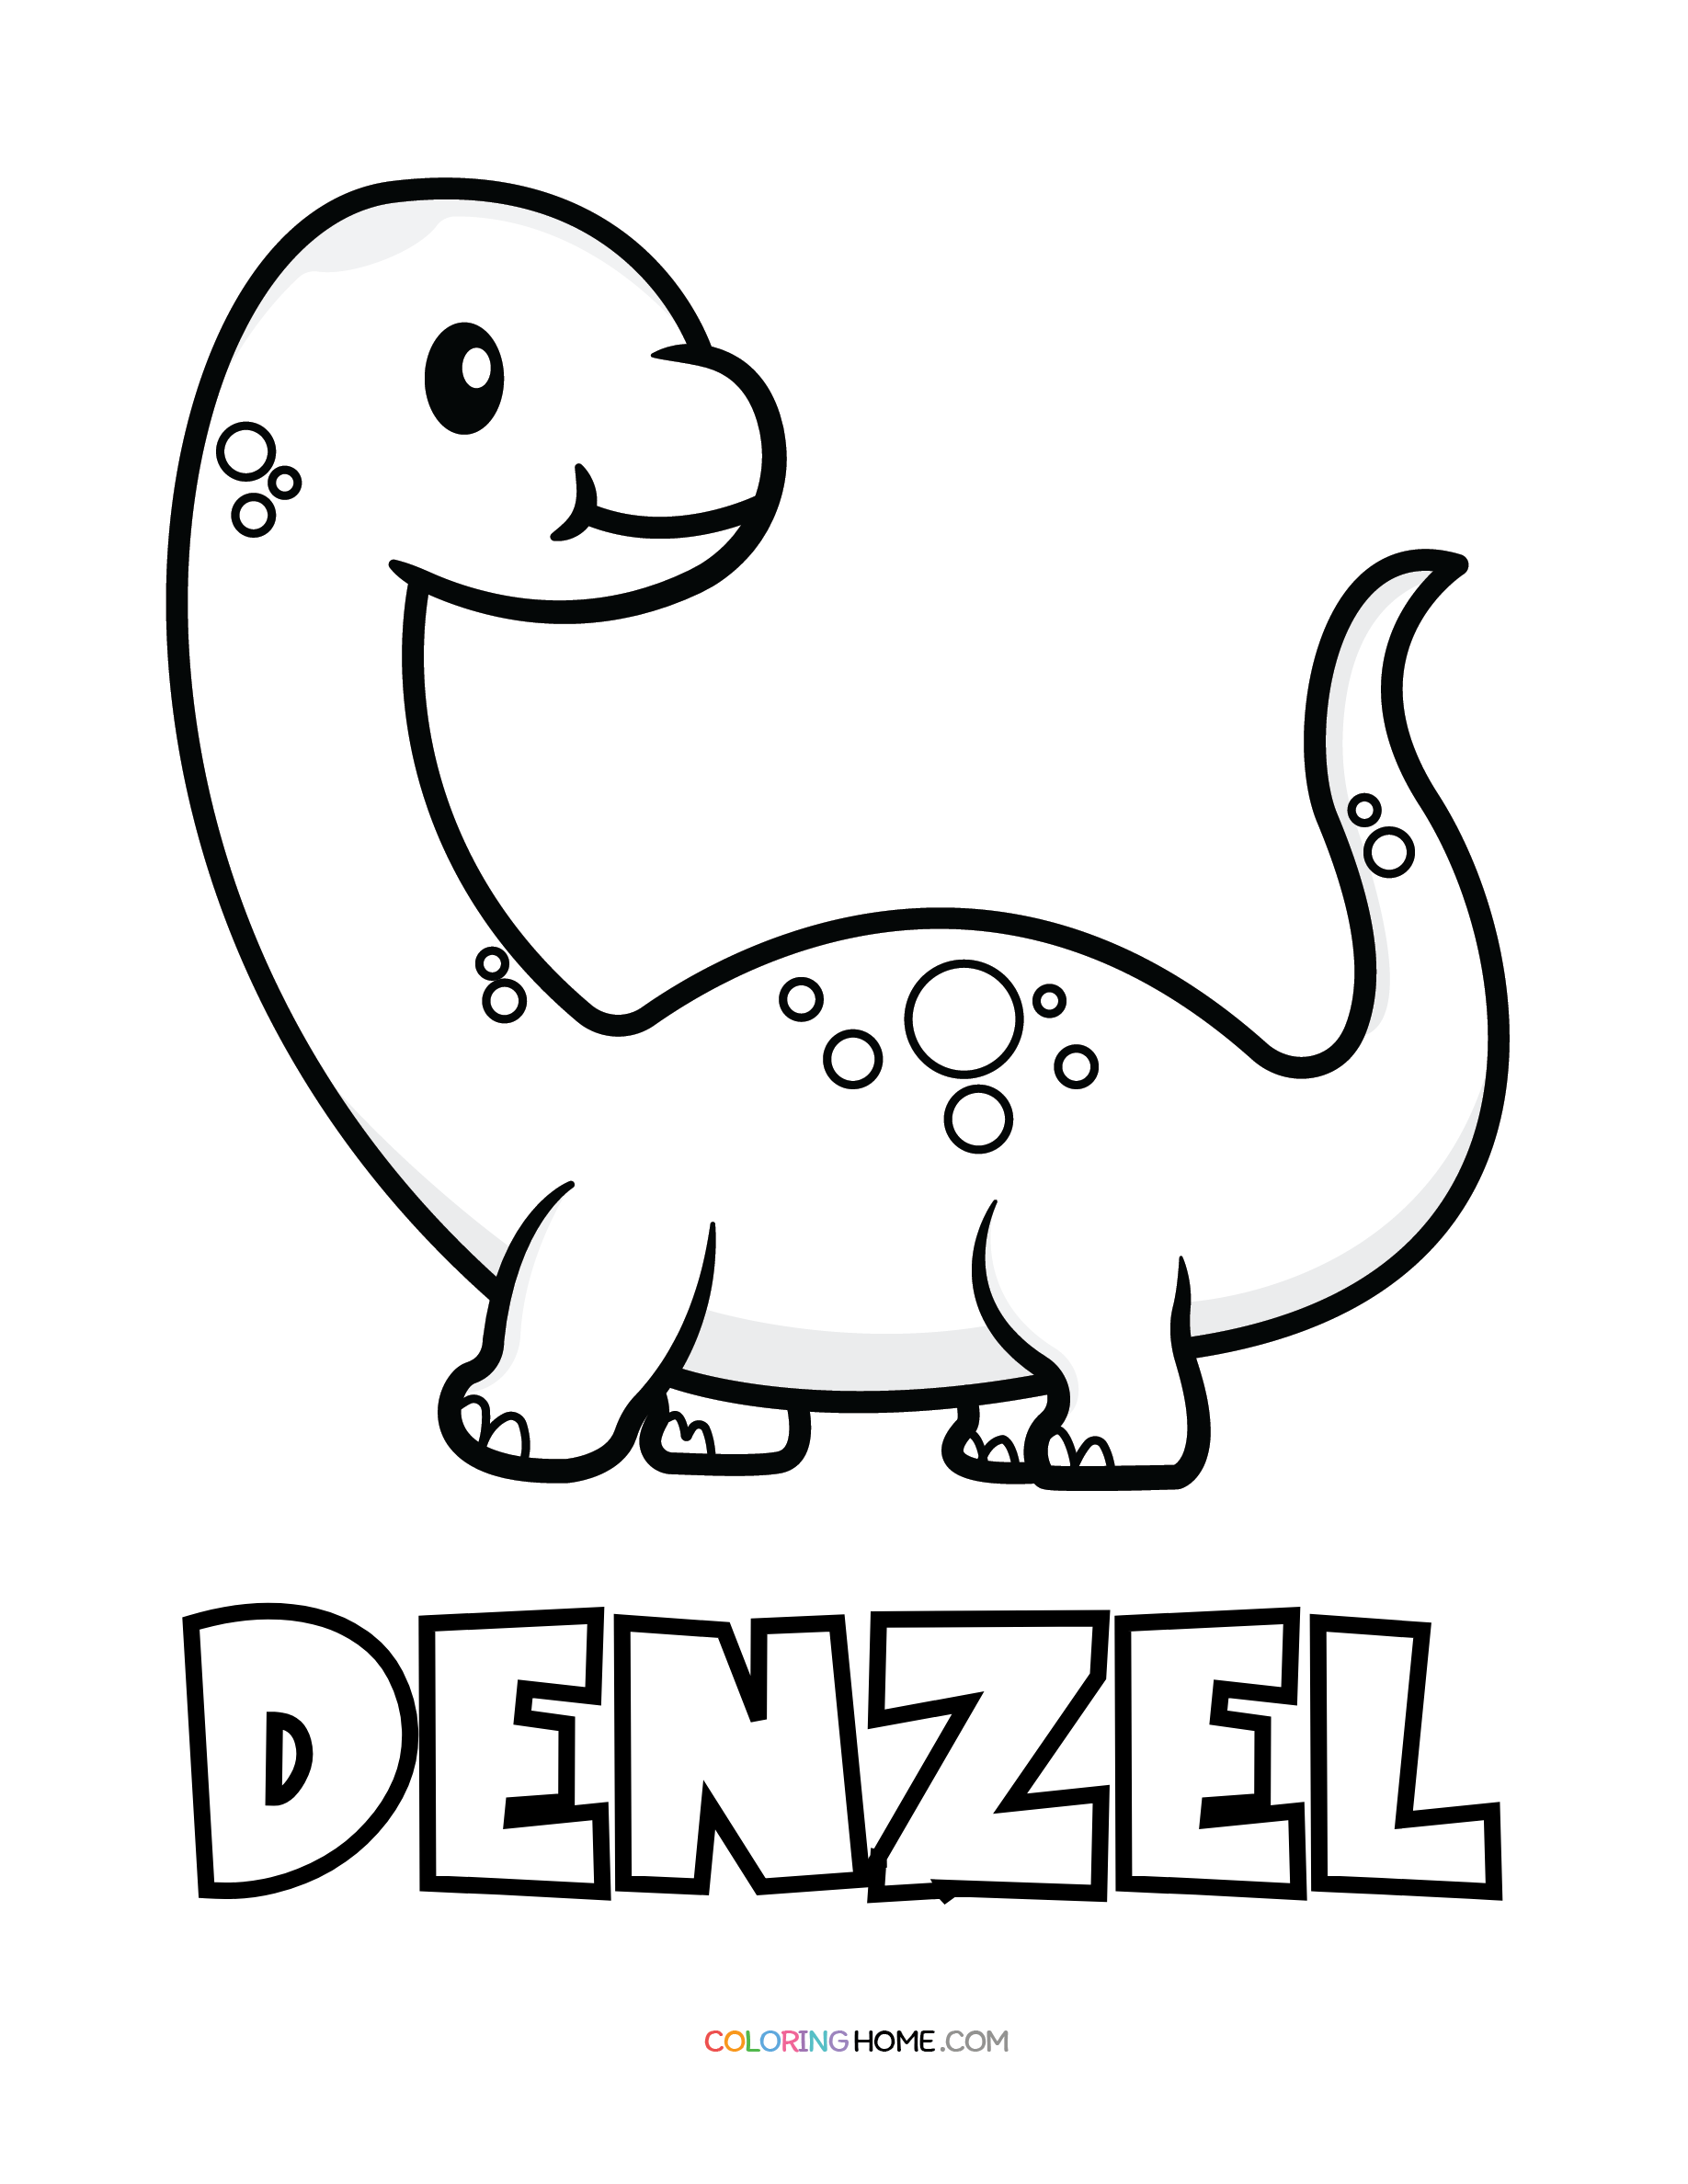 Denzel dinosaur coloring page